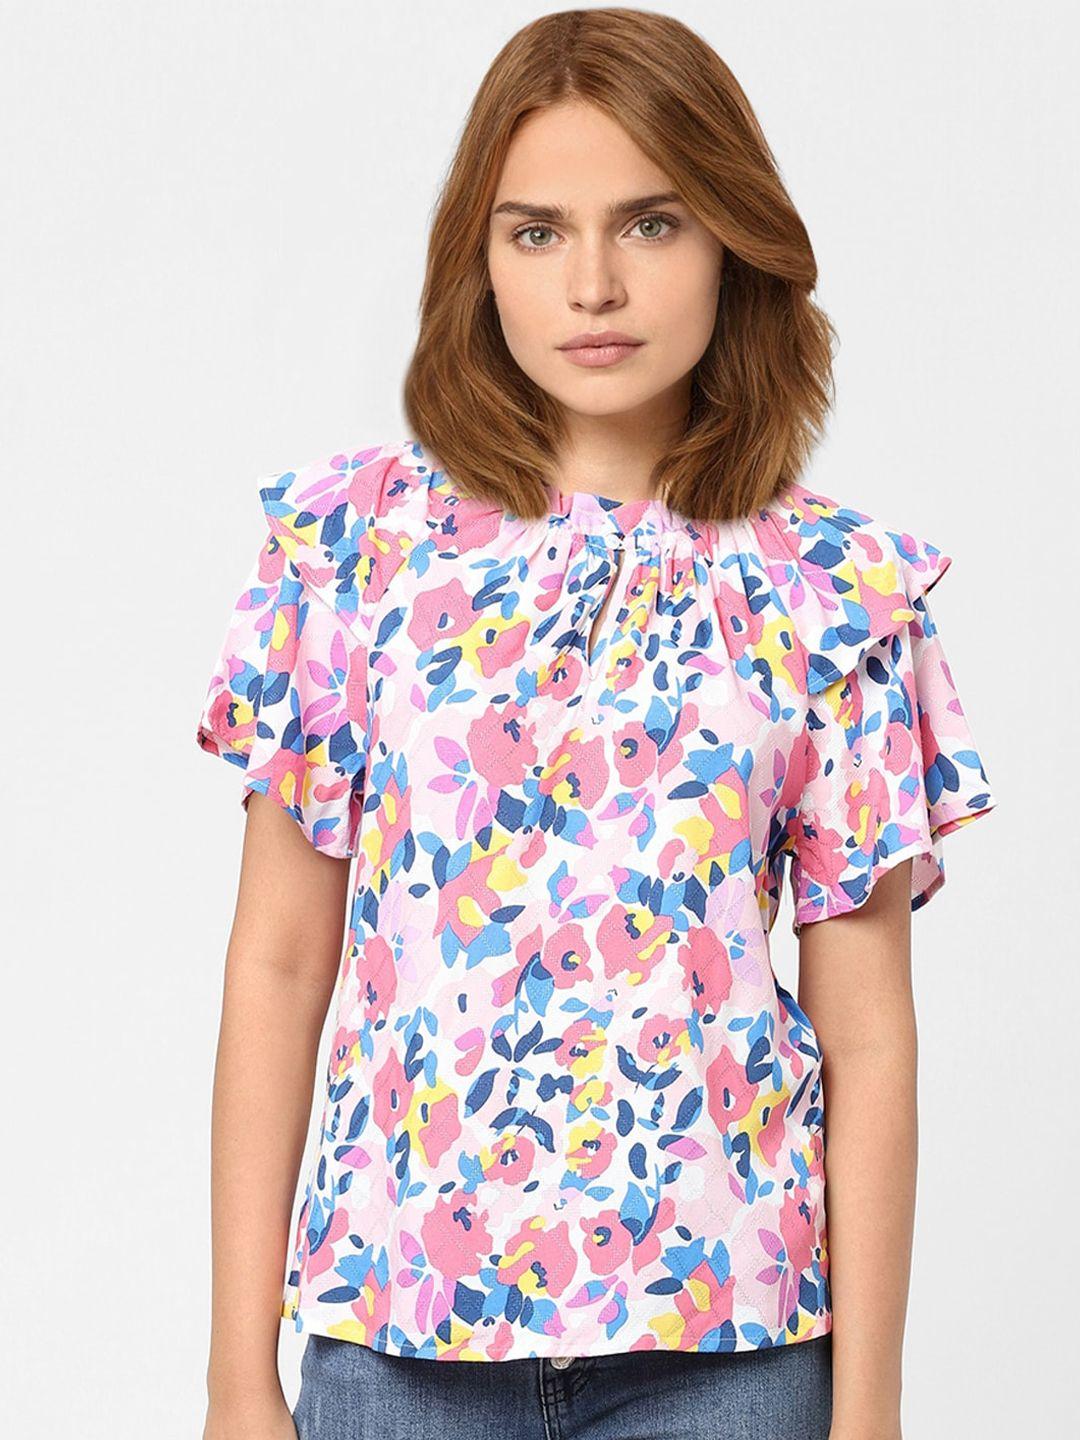 vero moda multicoloured floral print top